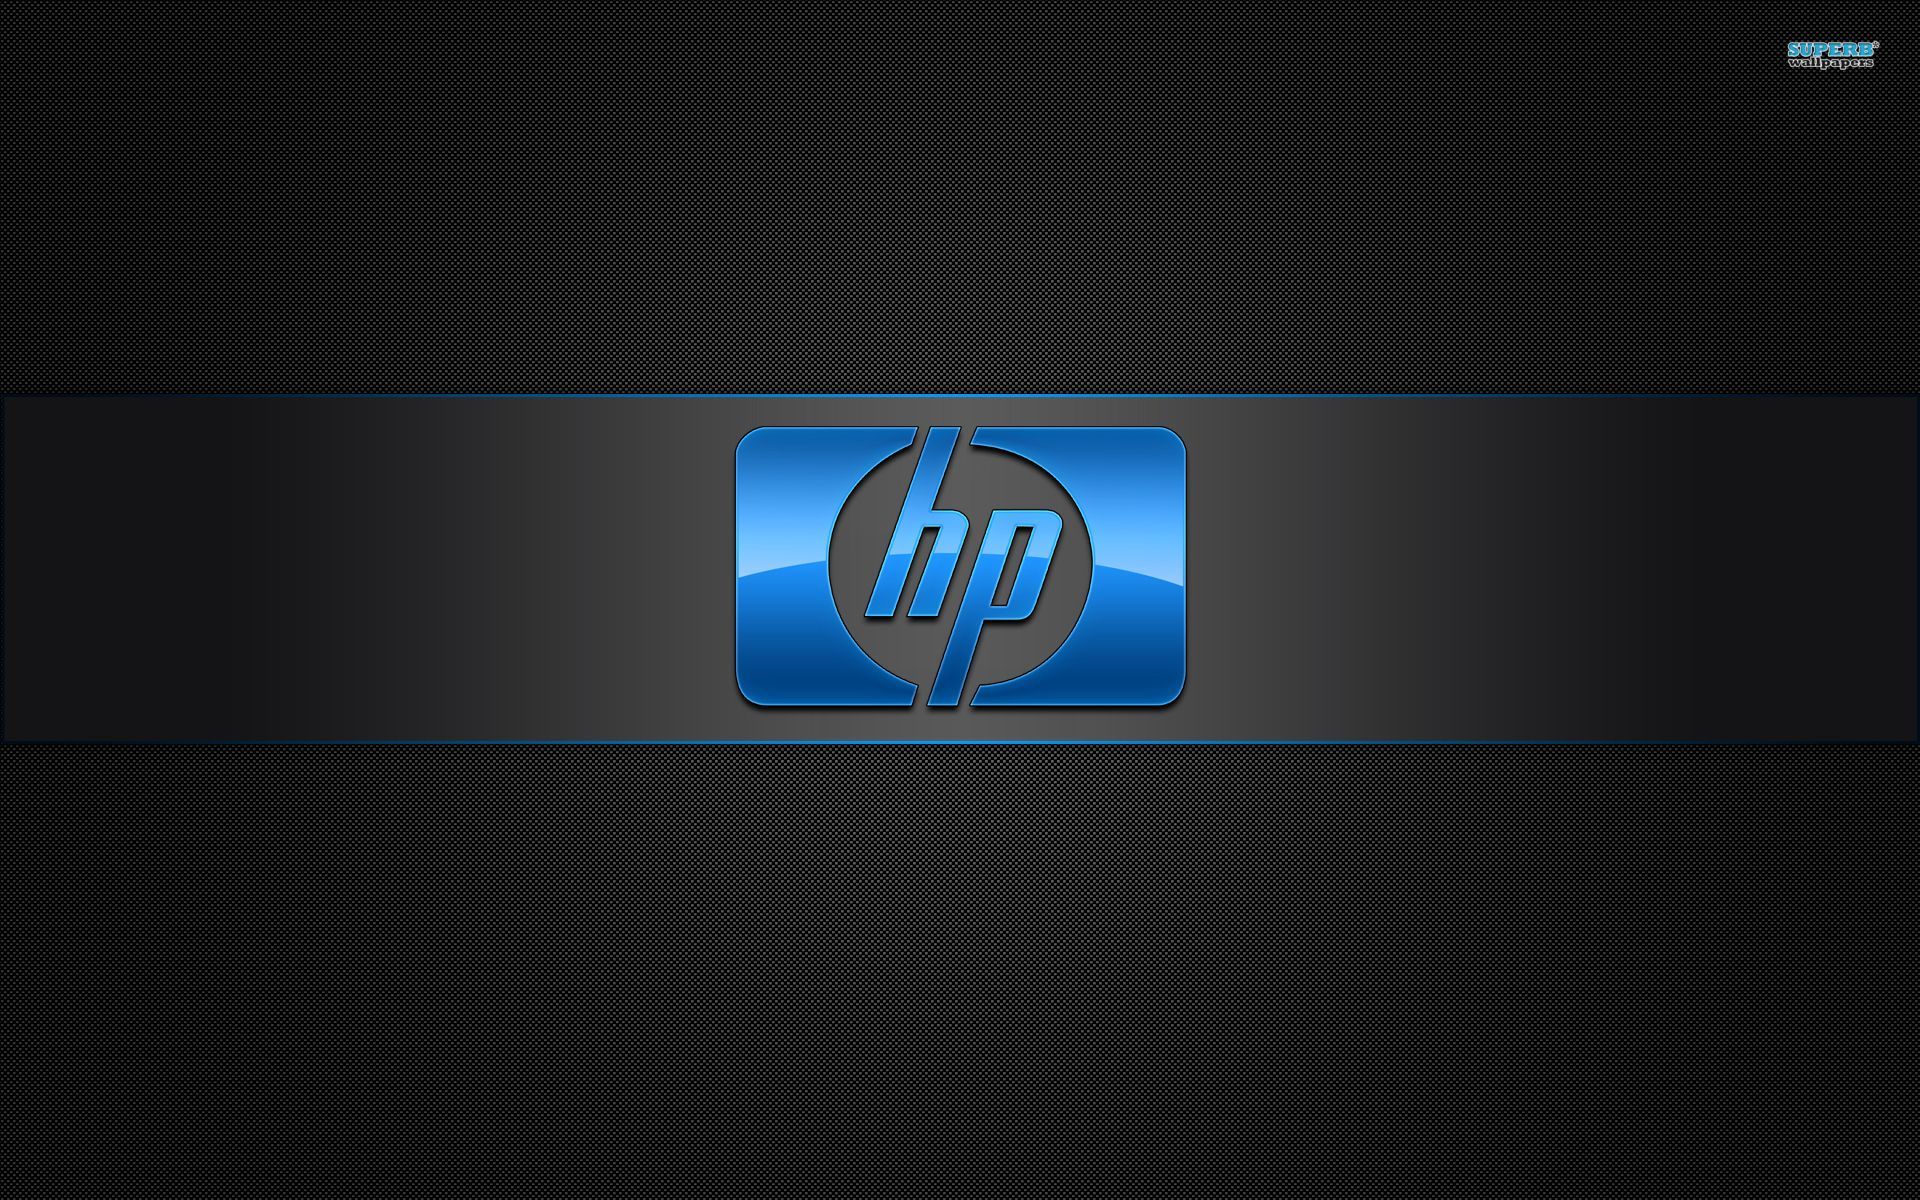 Hp logo wallpaper - Computer wallpapers -